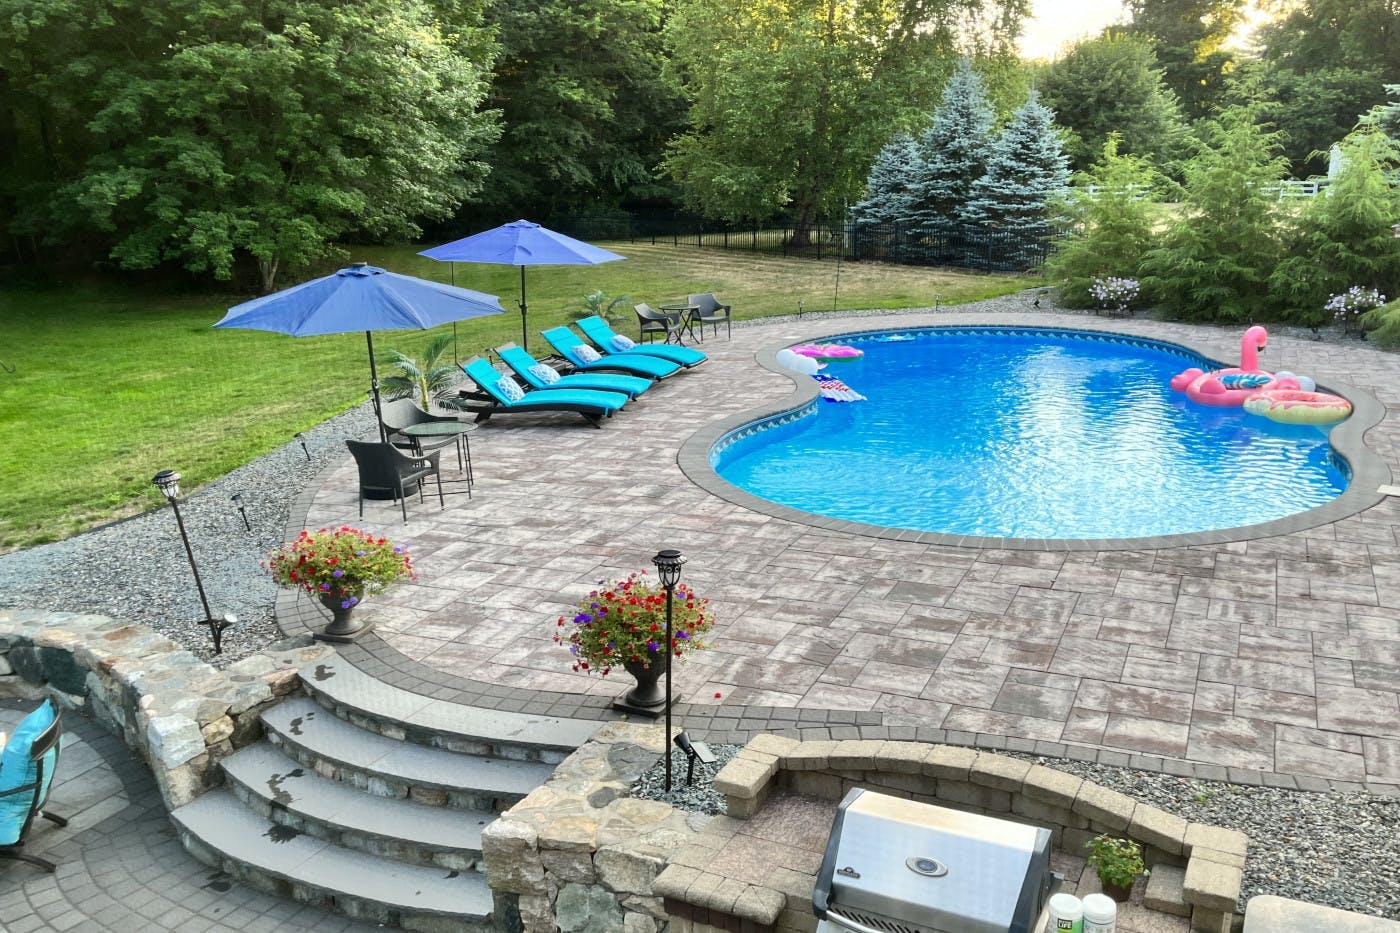 Large saltwater pool for family fun!